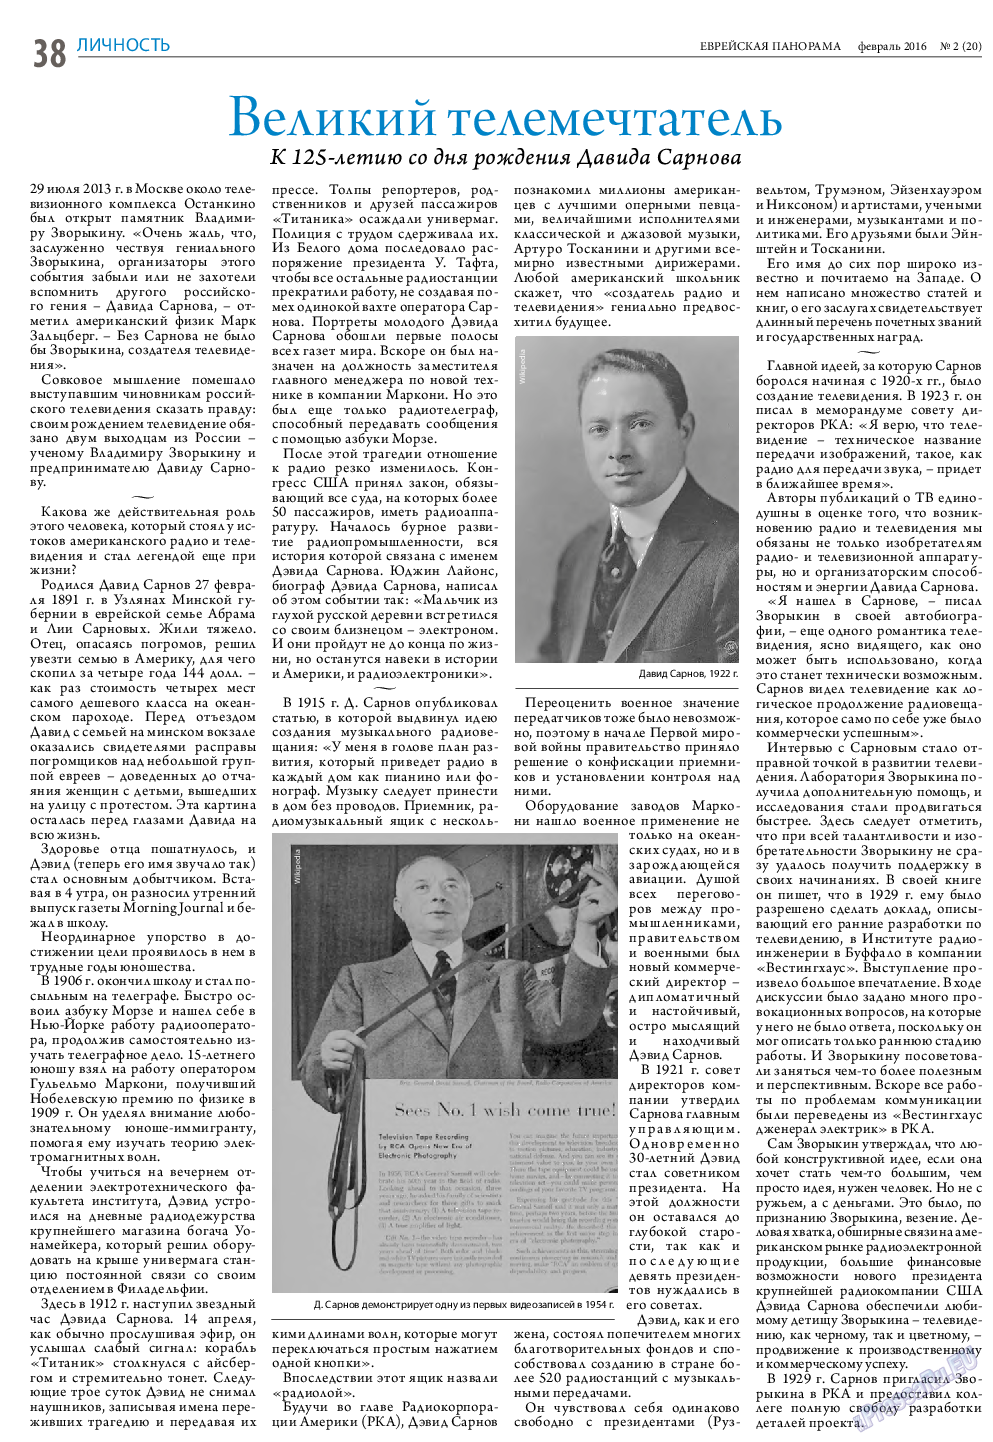 Еврейская панорама, газета. 2016 №2 стр.38